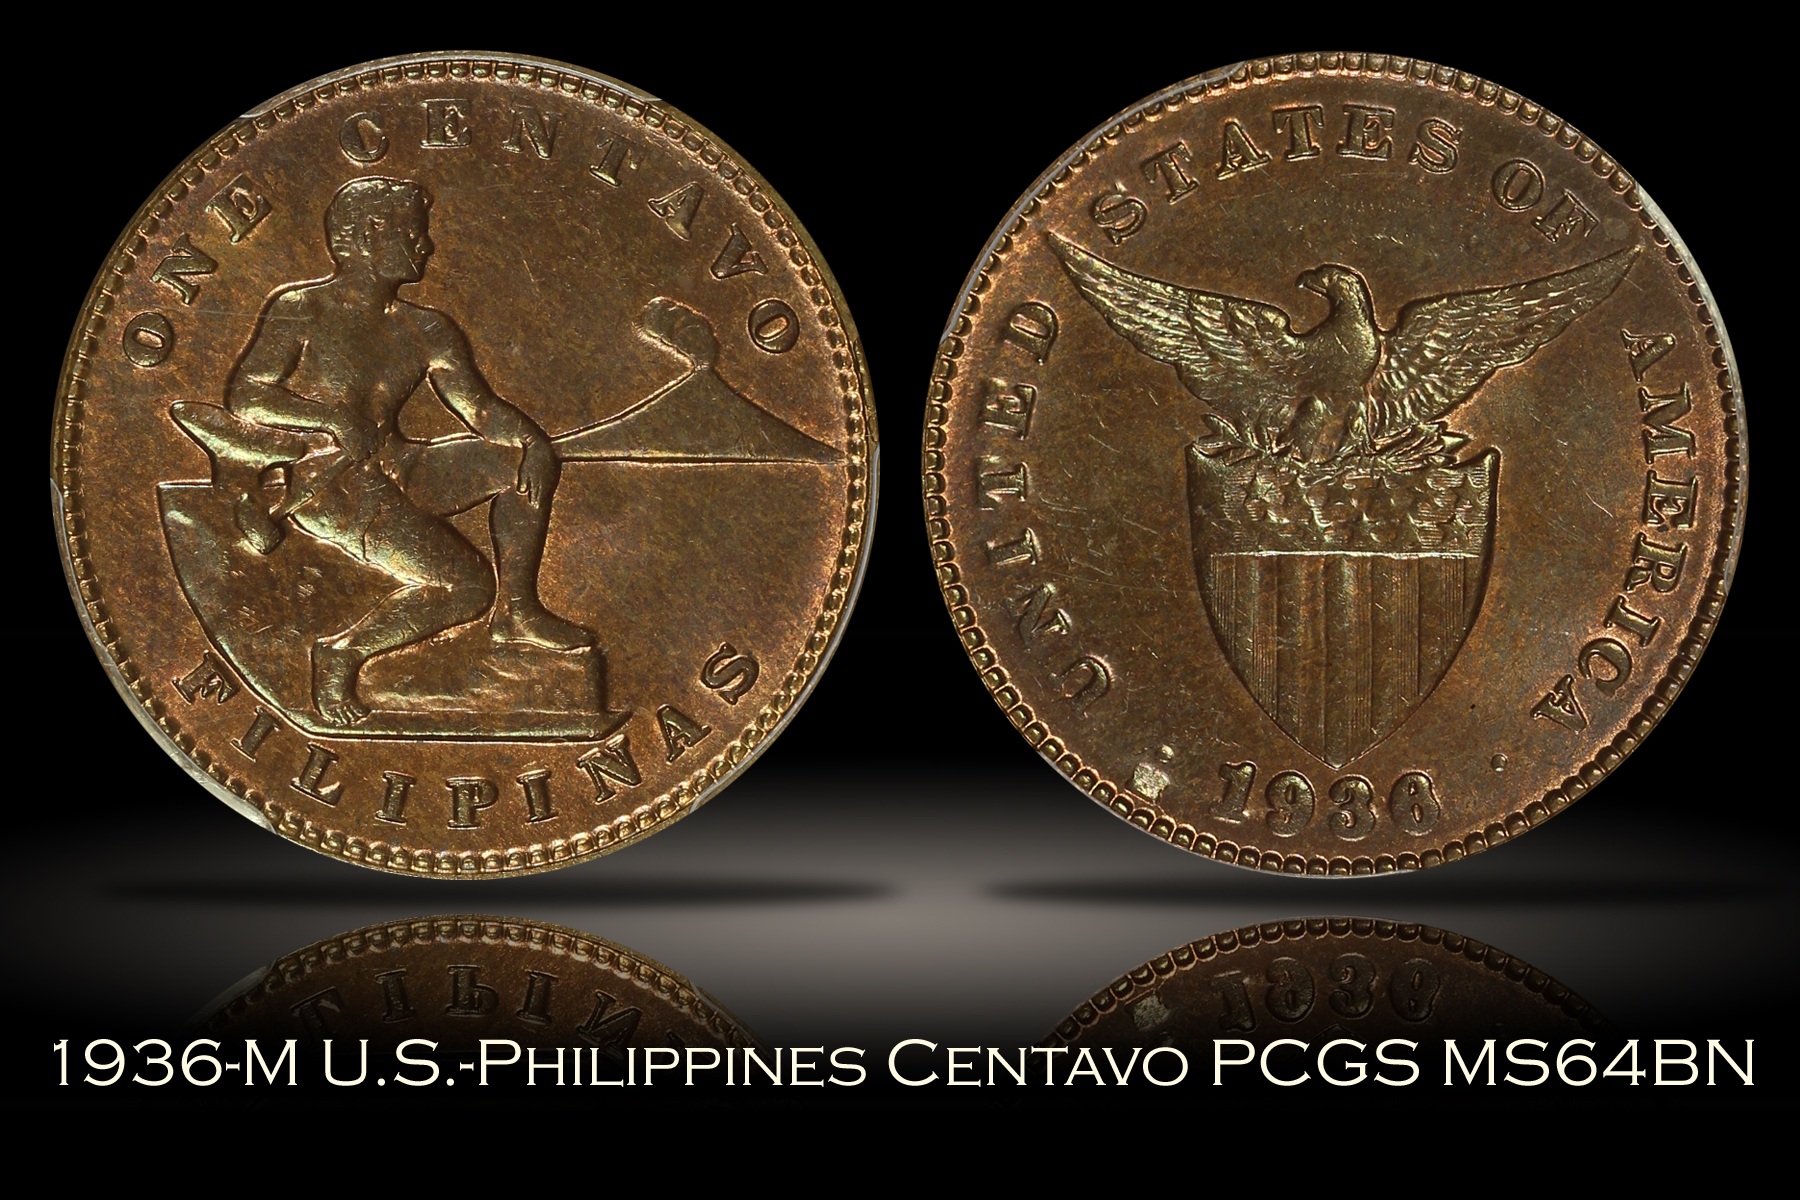 1936-M U.S.-Philippines One Centavo PCGS MS64BN